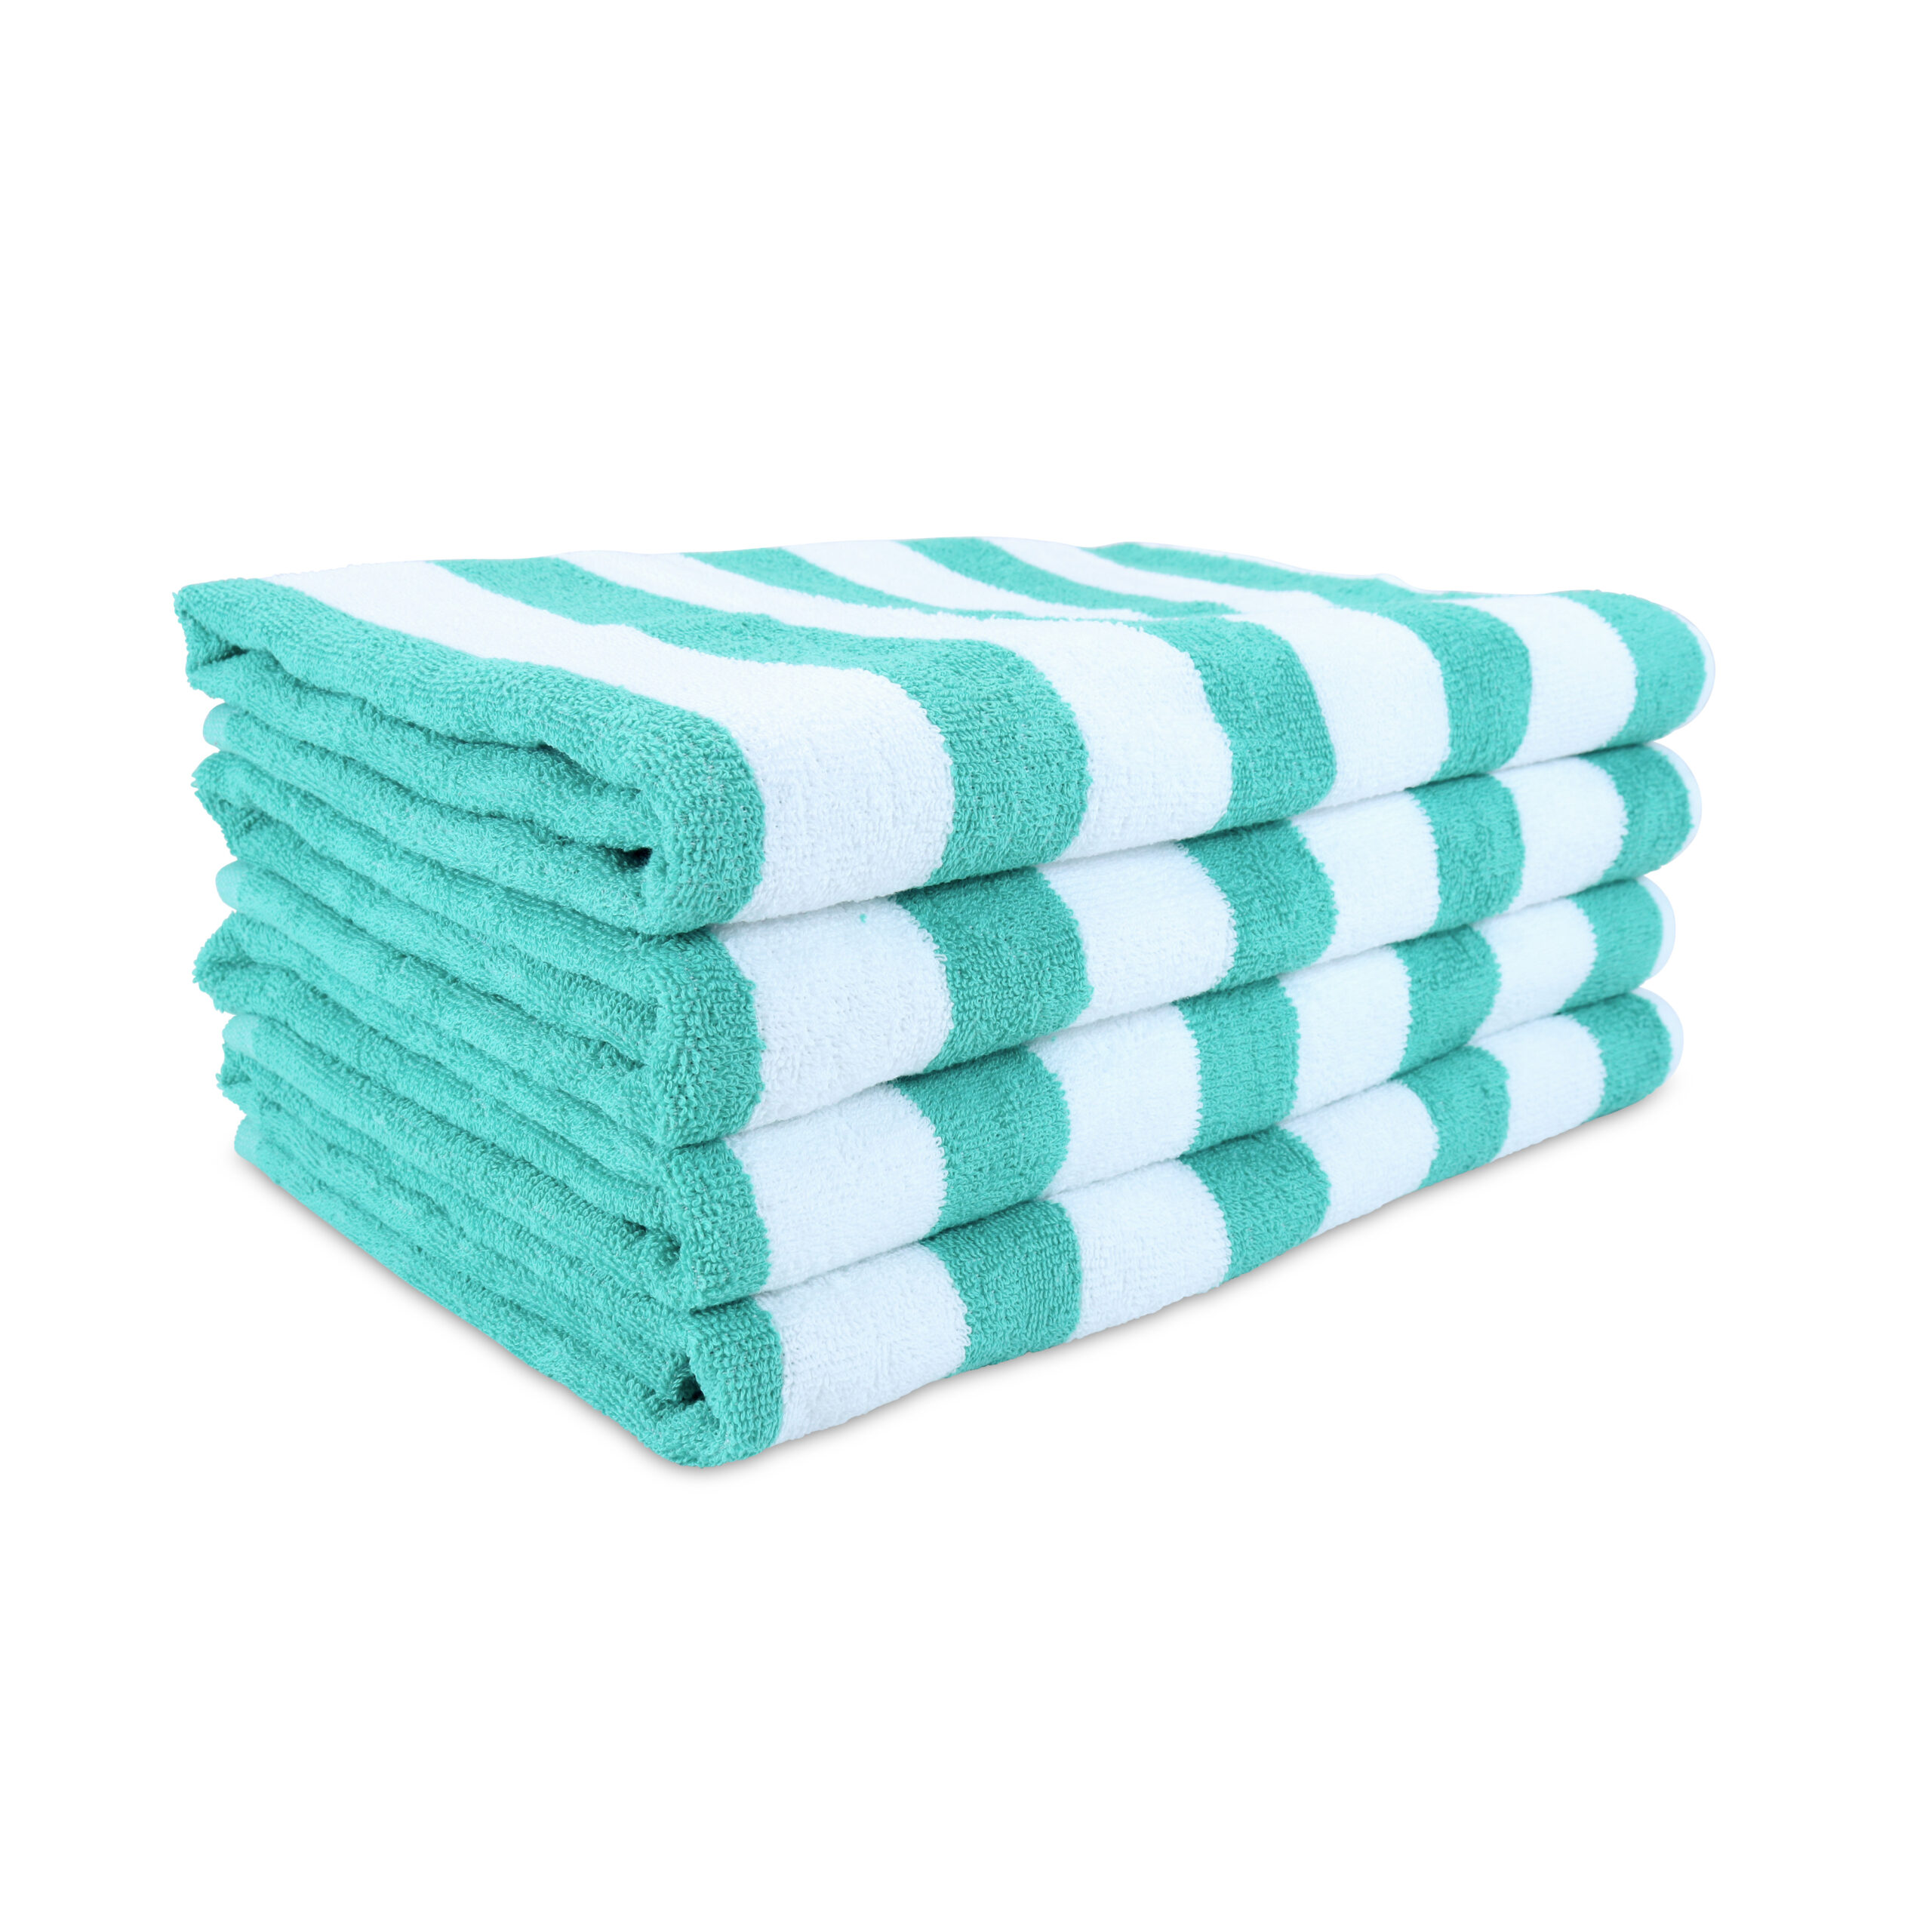 Cali Cabana Towels - Green stacked